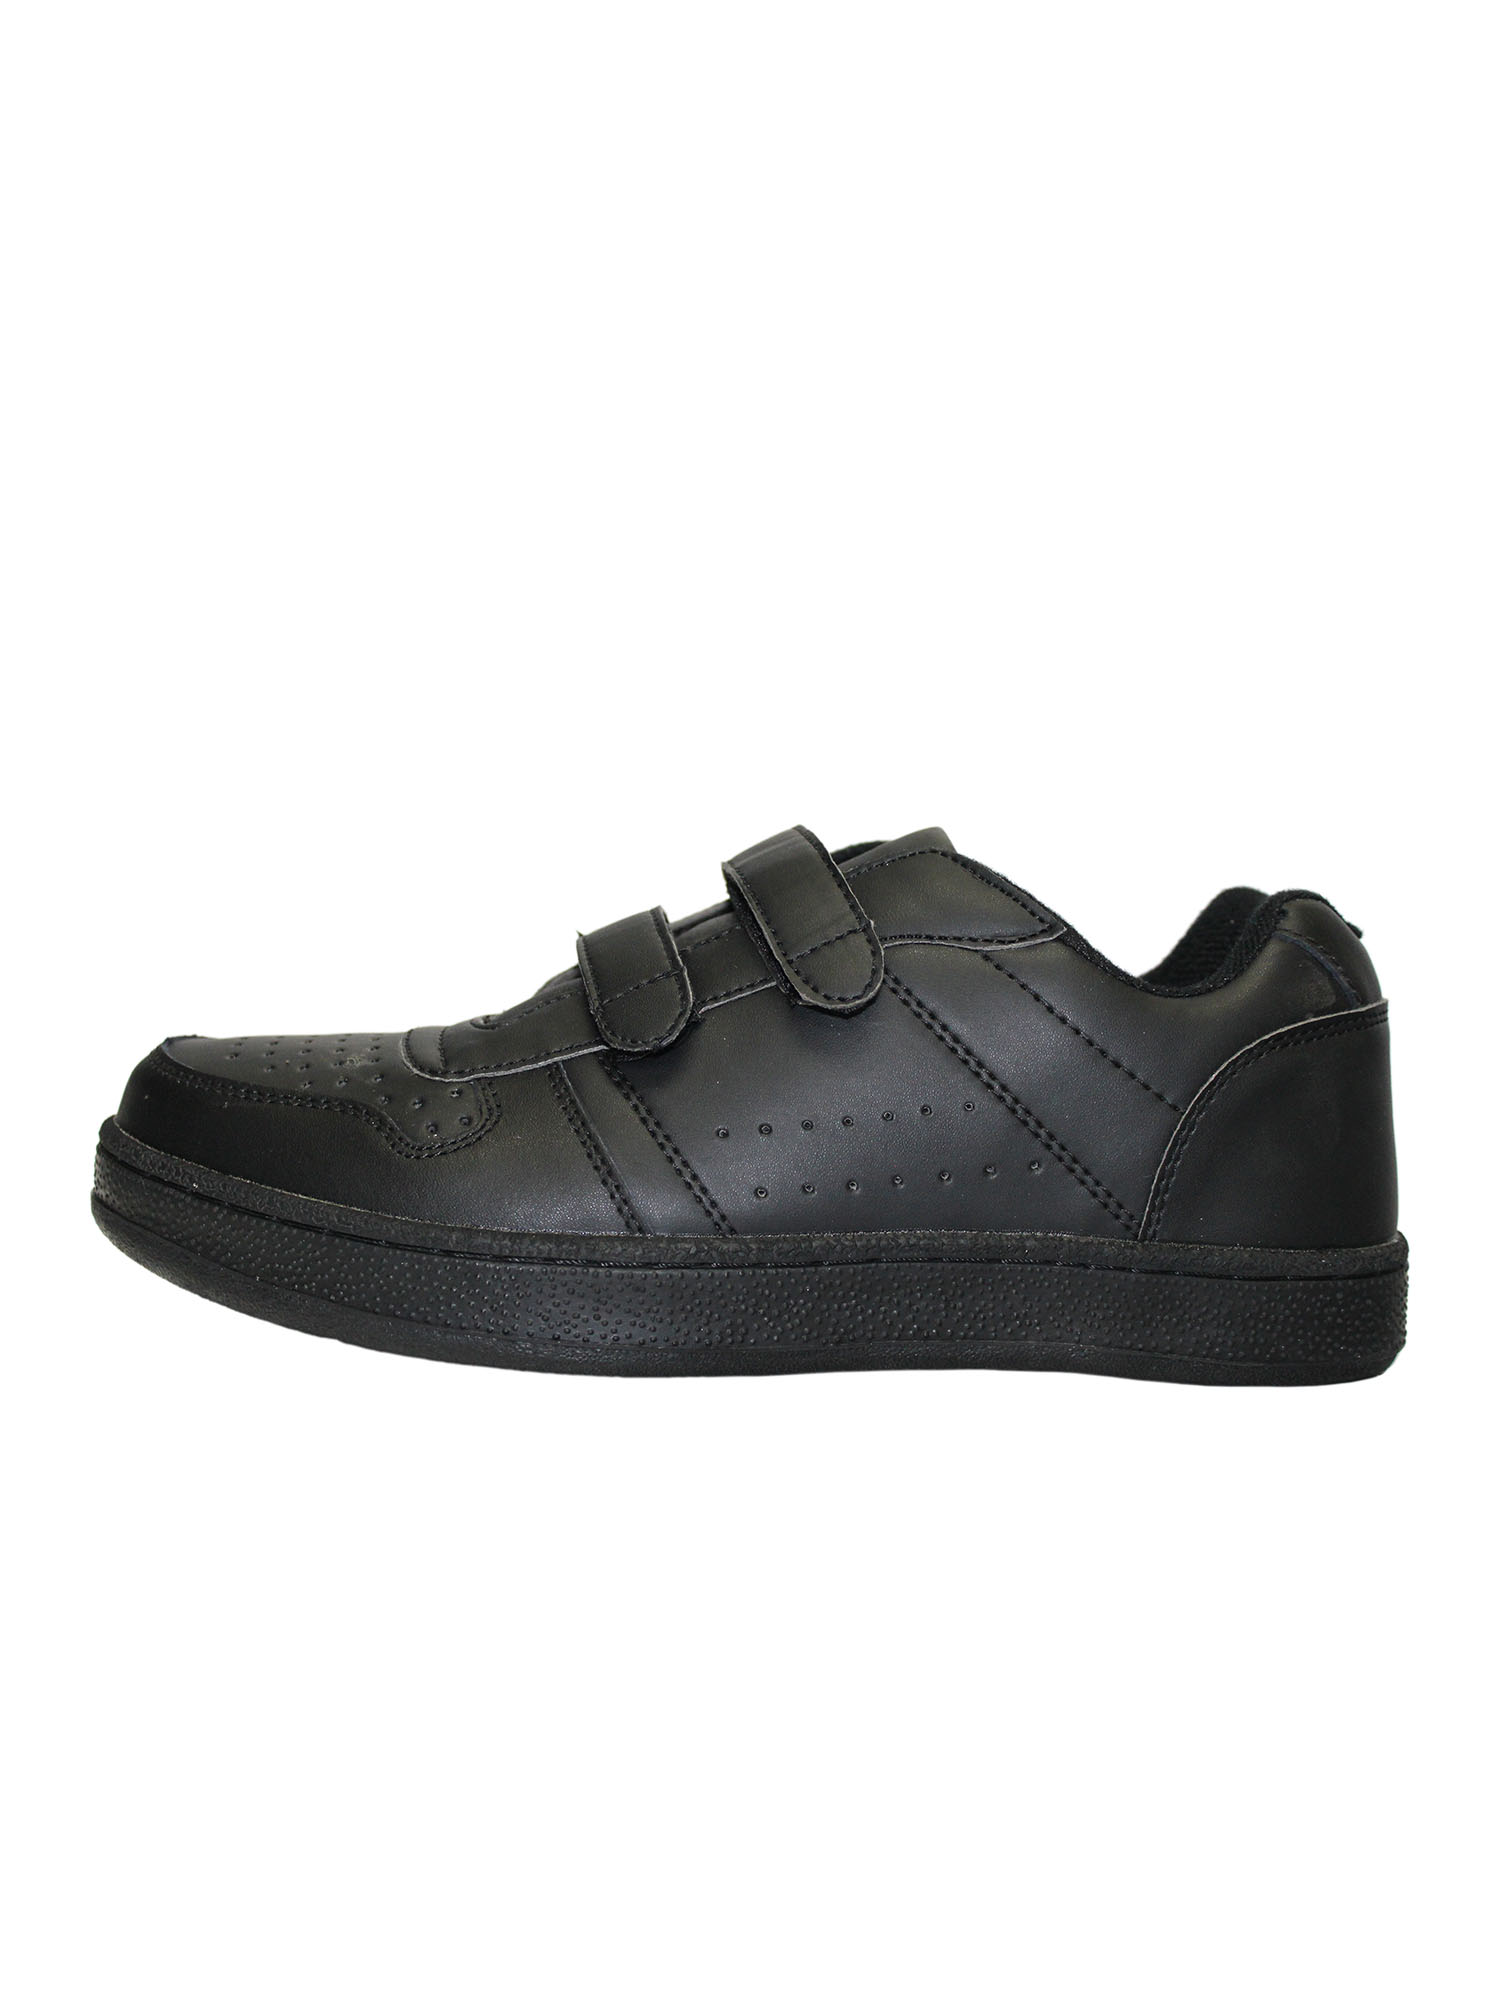 Tanleewa Men's Leather Strap Sneakers Lightweight Hook and Loop Walking Shoe Size 8.5 Adult Male - image 2 of 4